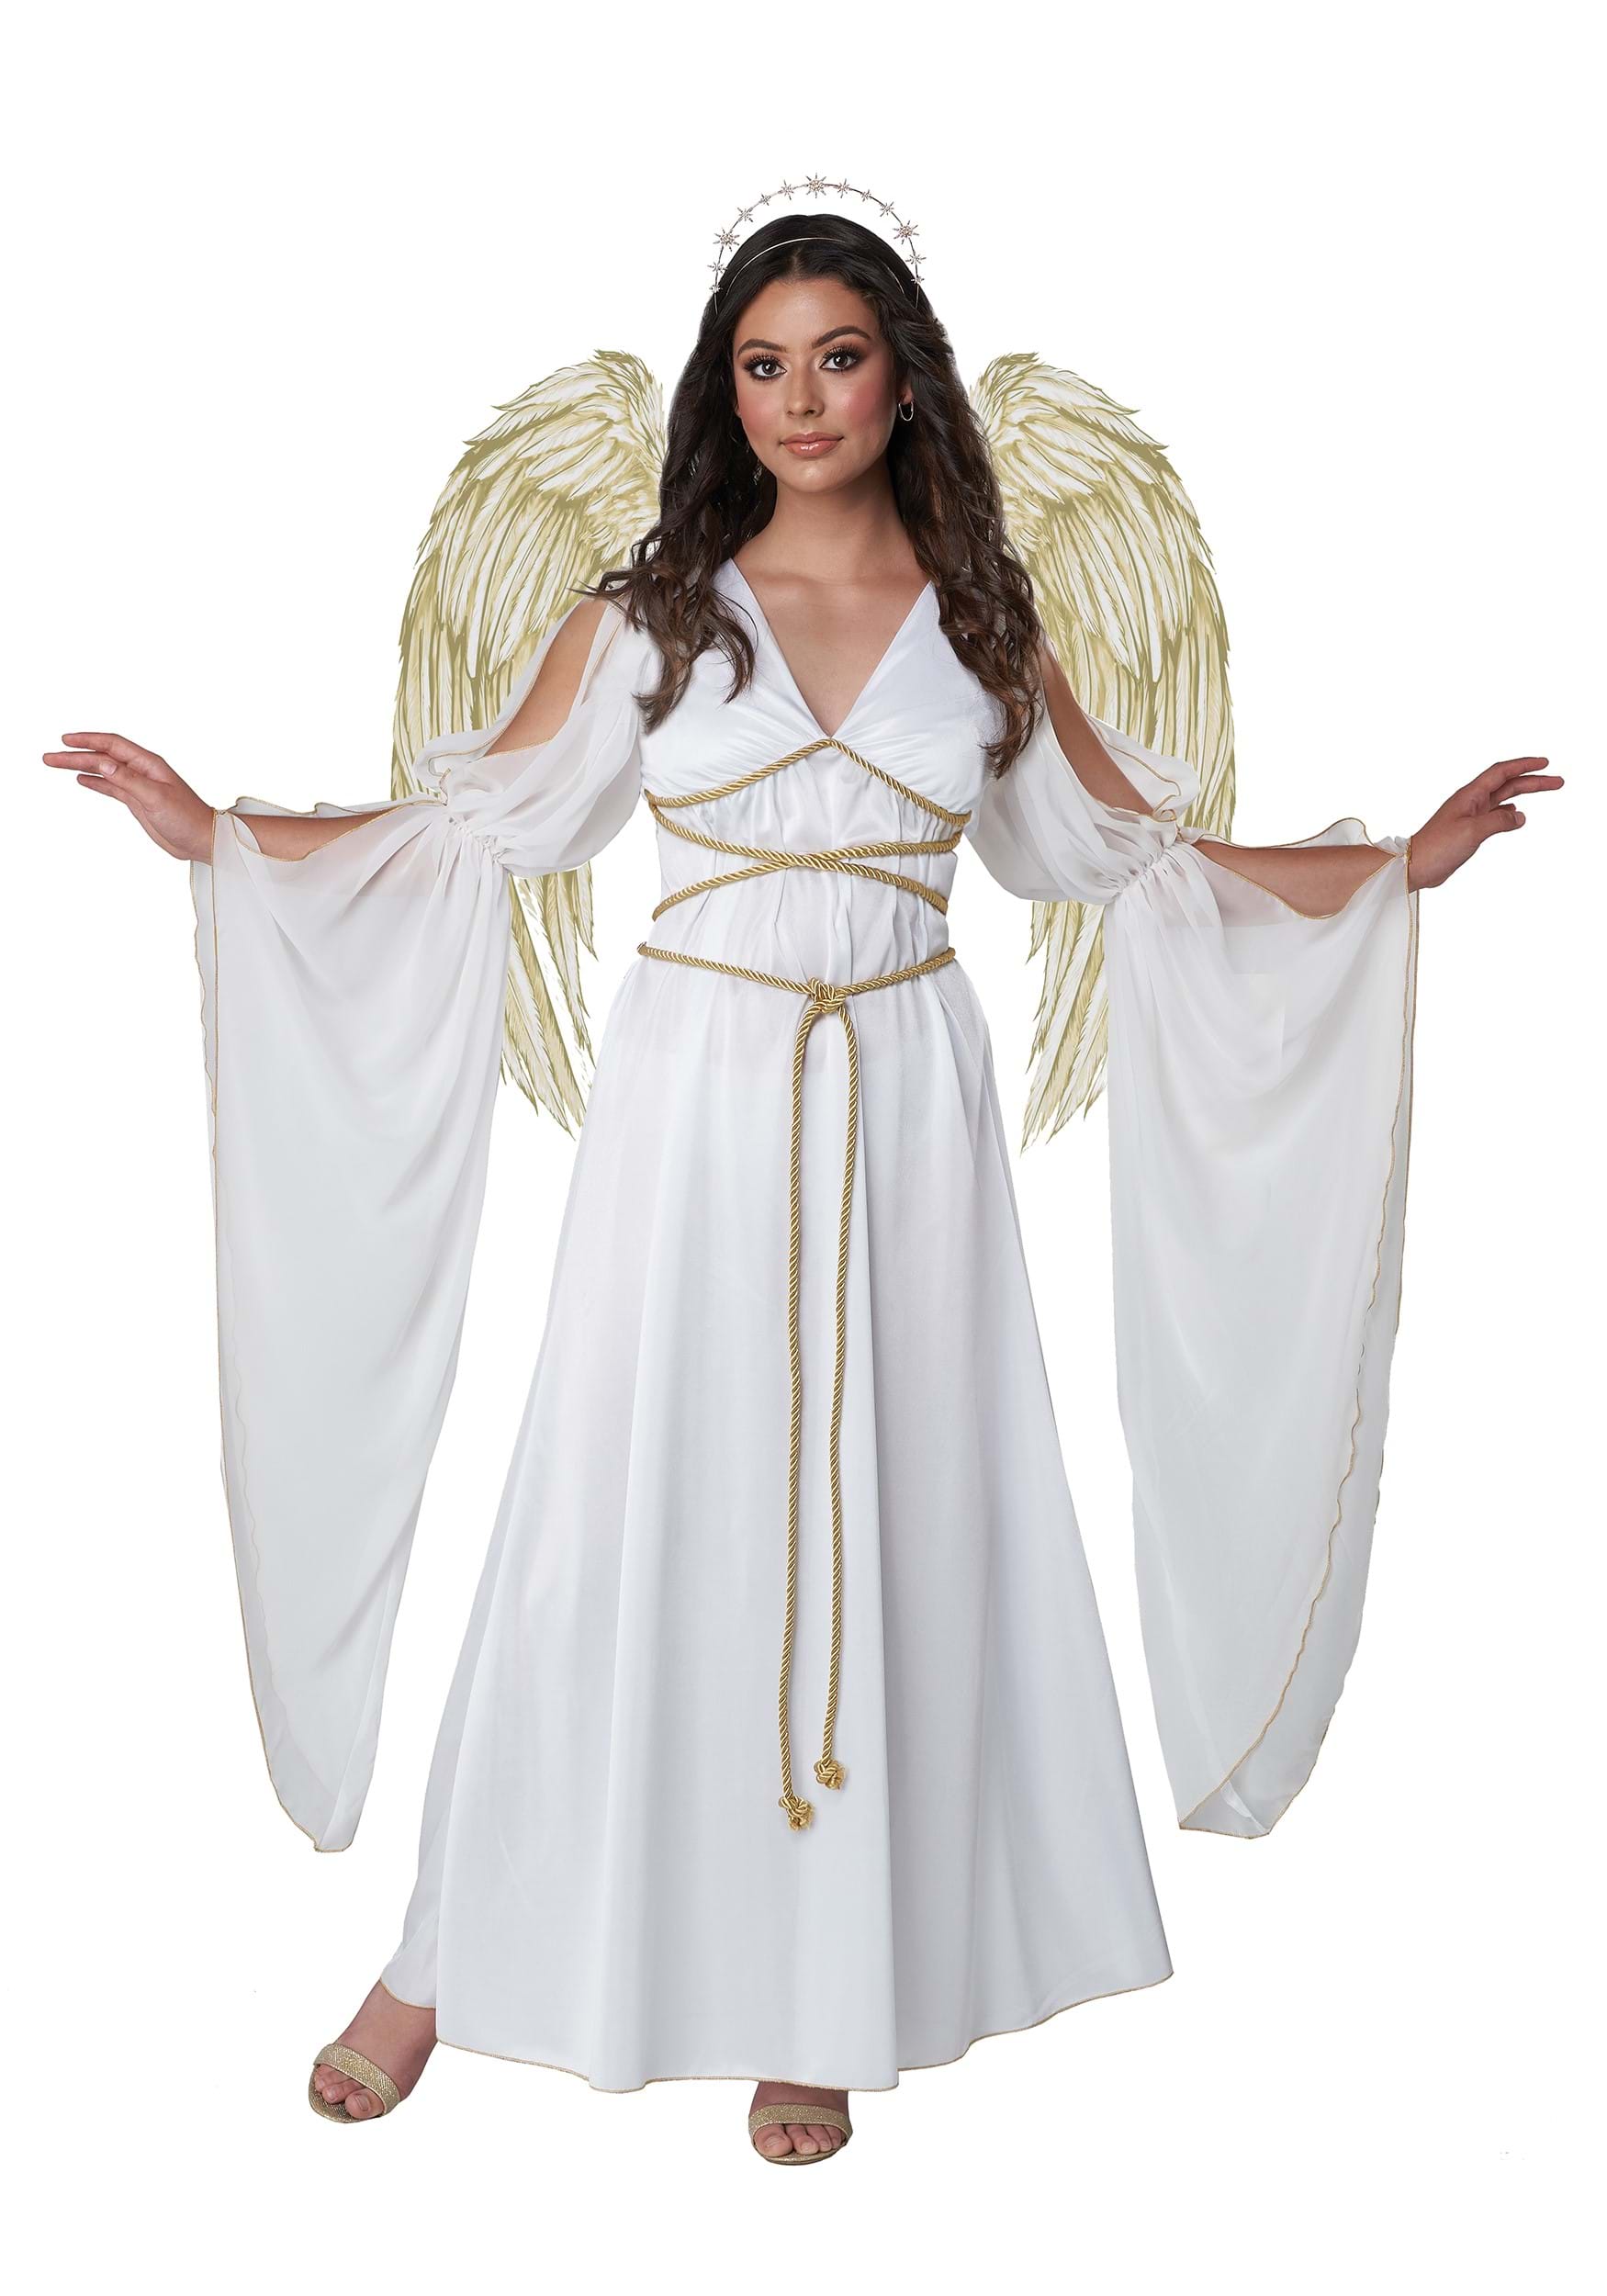 Top 48+ imagen angel outfit